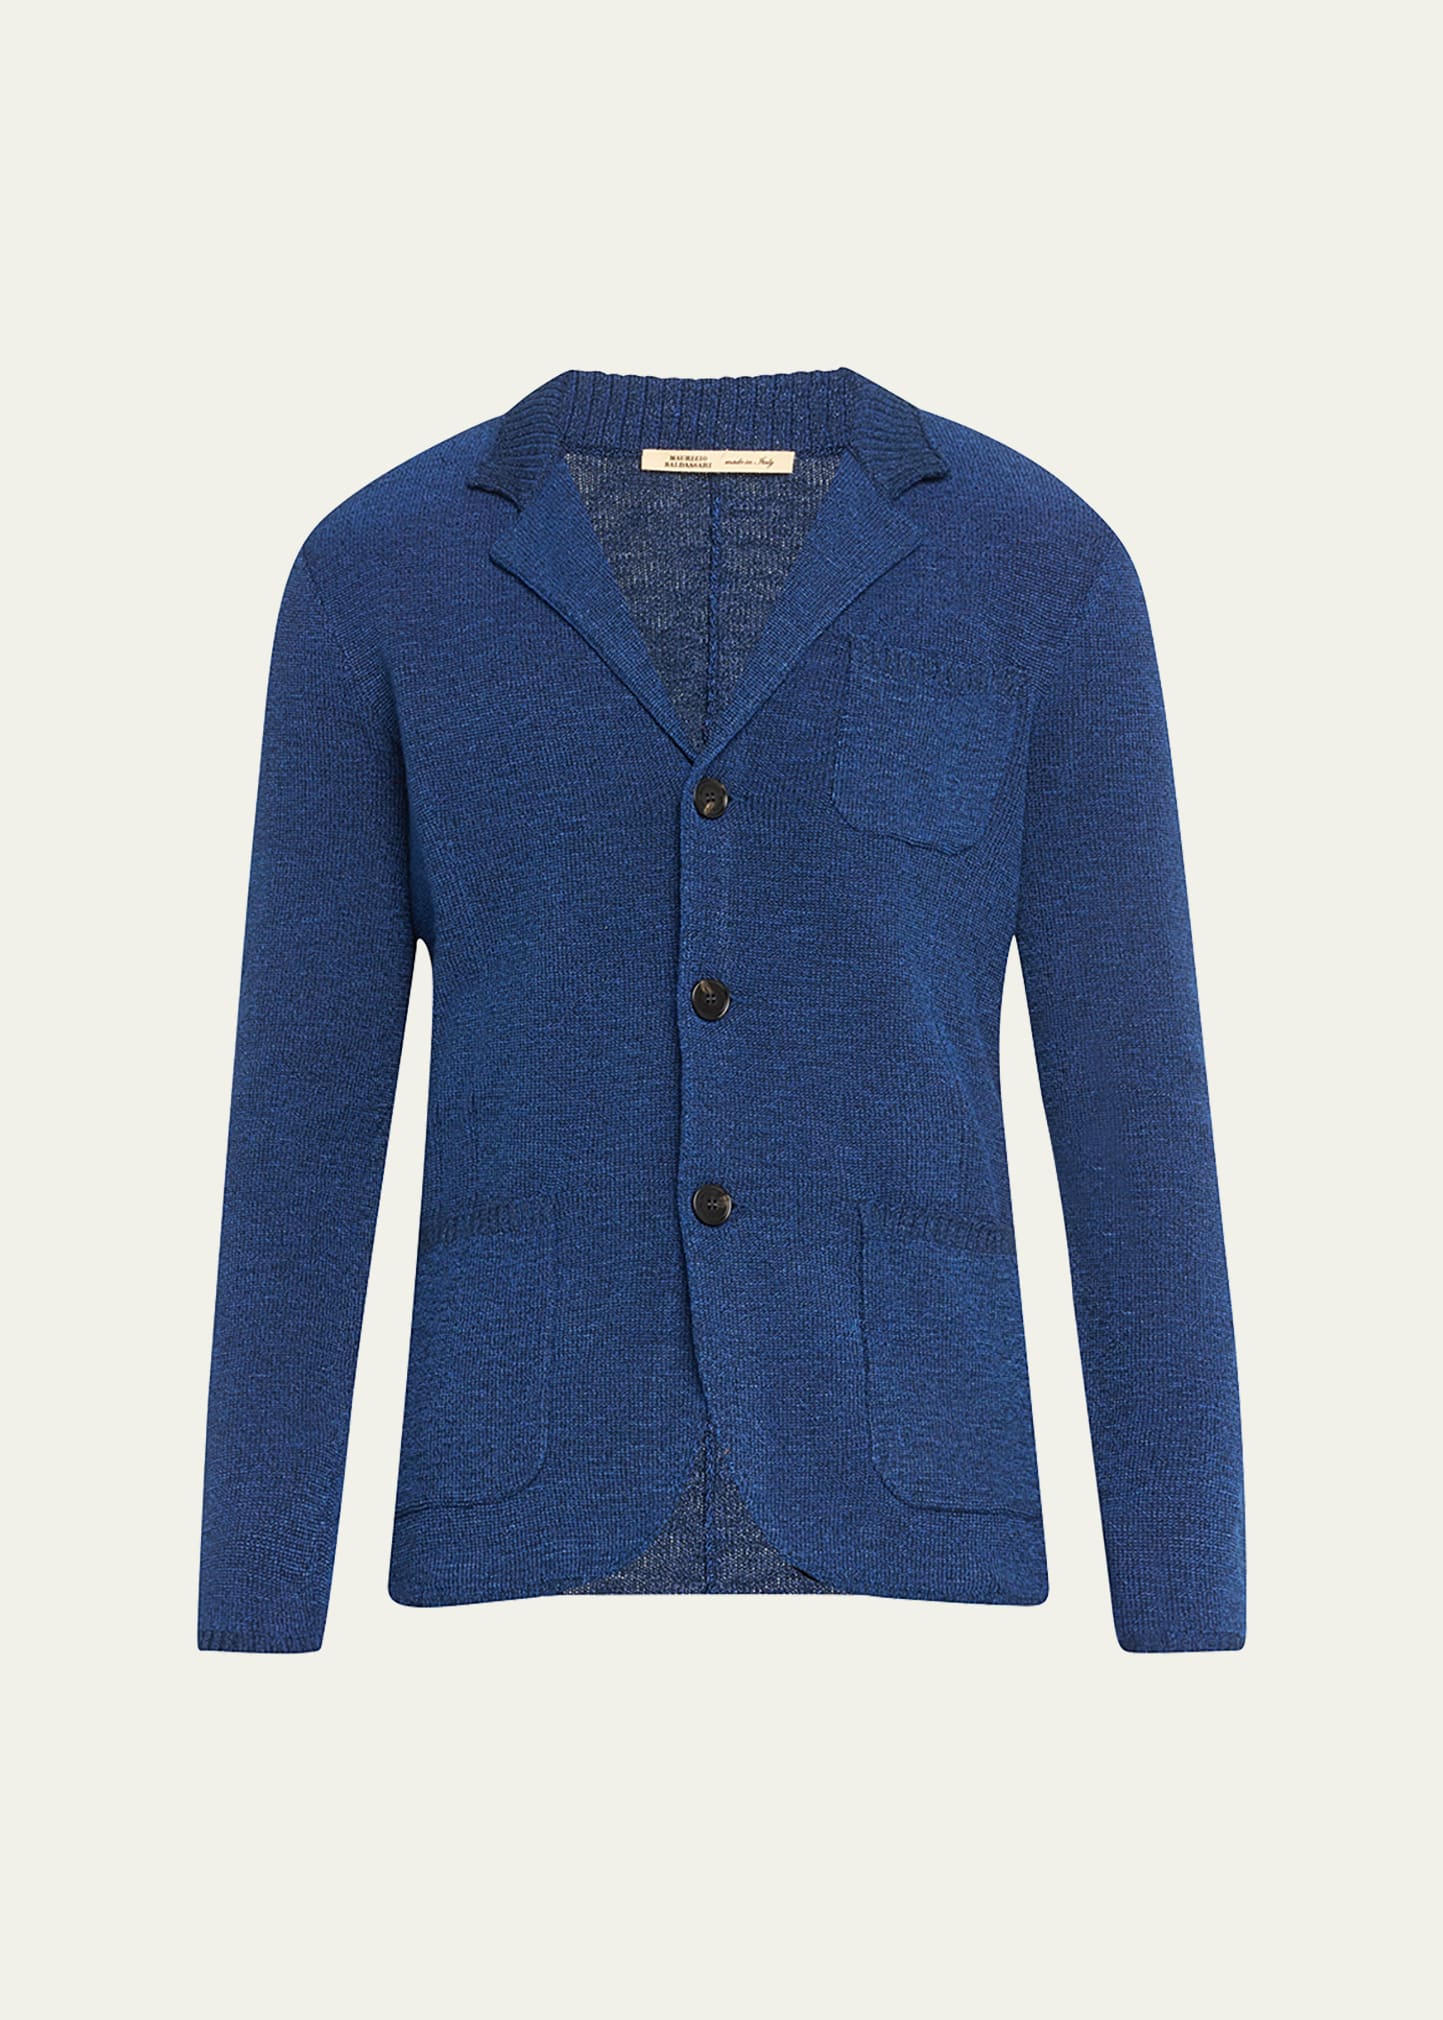 Baldassari Men's Mouline Knit Sweater Jacket In Blue